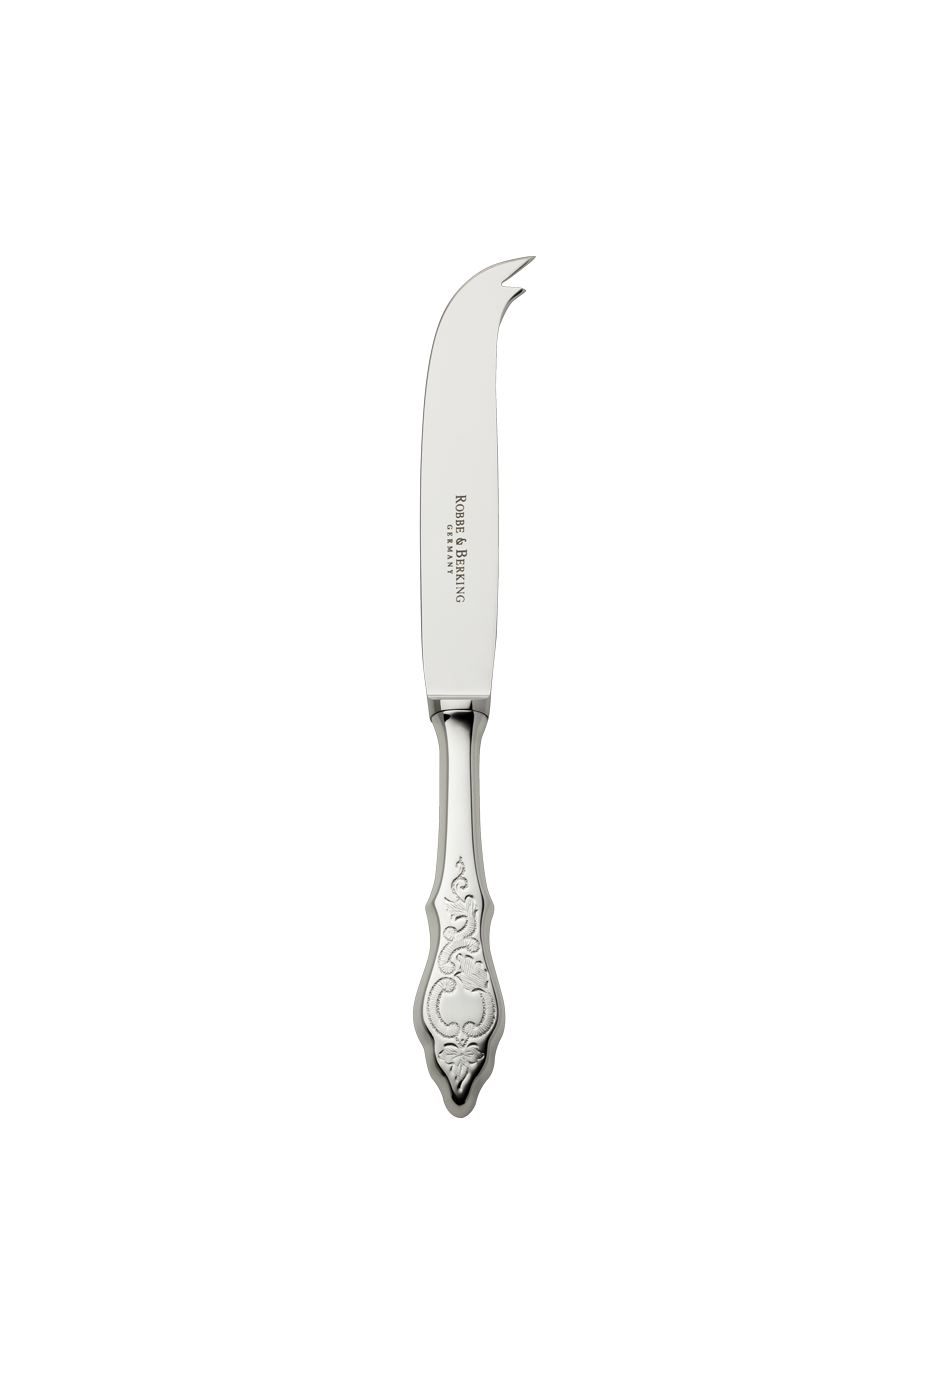 Ostfriesen Cheese Knife (18/8 stainless steel)